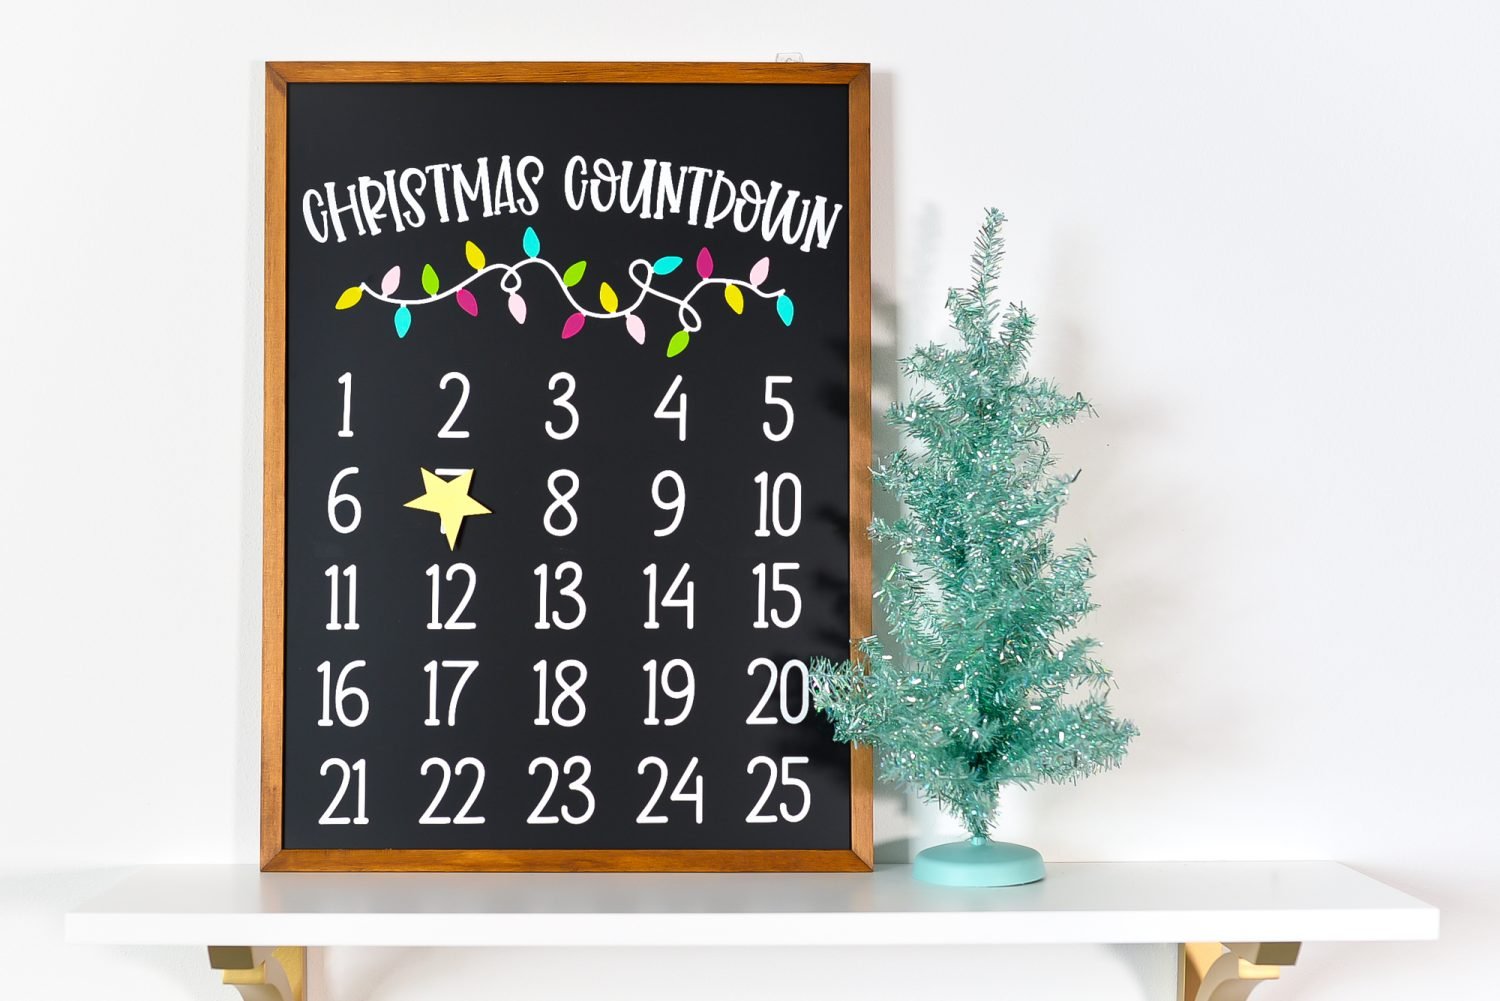 Christmas countdown calendar on a shelf with a faux Christmas tree.